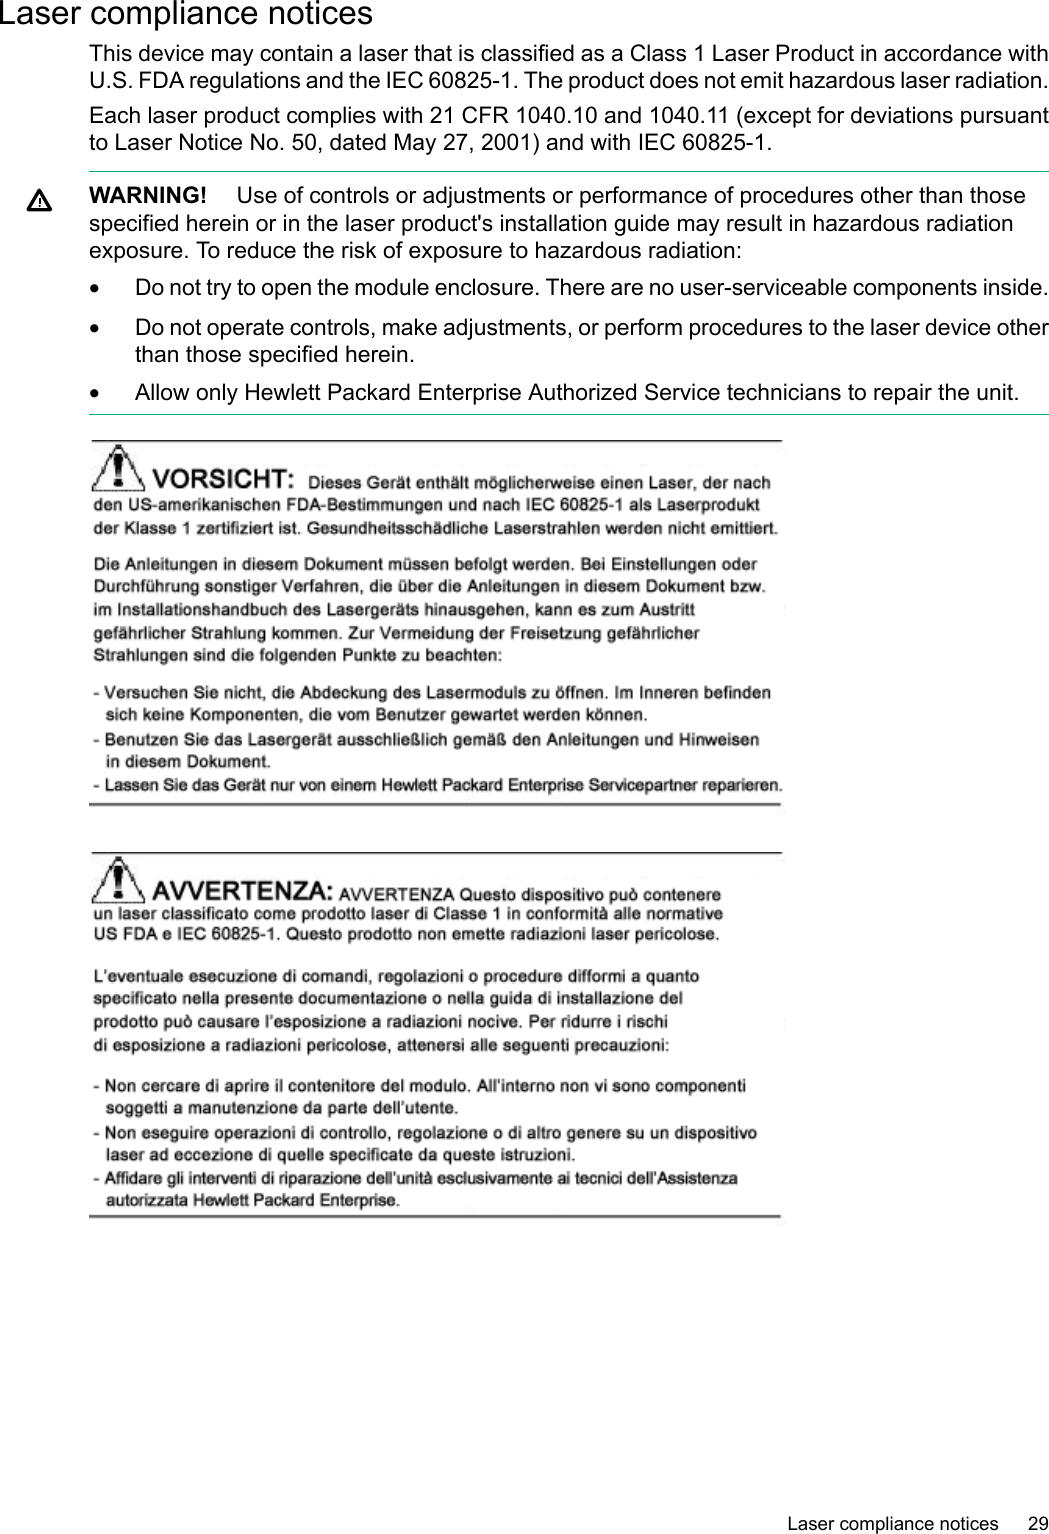 Page 29 of Hewlett Packard Enterprise APINR203P203 802.11 a/b/g/n/ac Wireless Access Point User Manual  3 of 3 